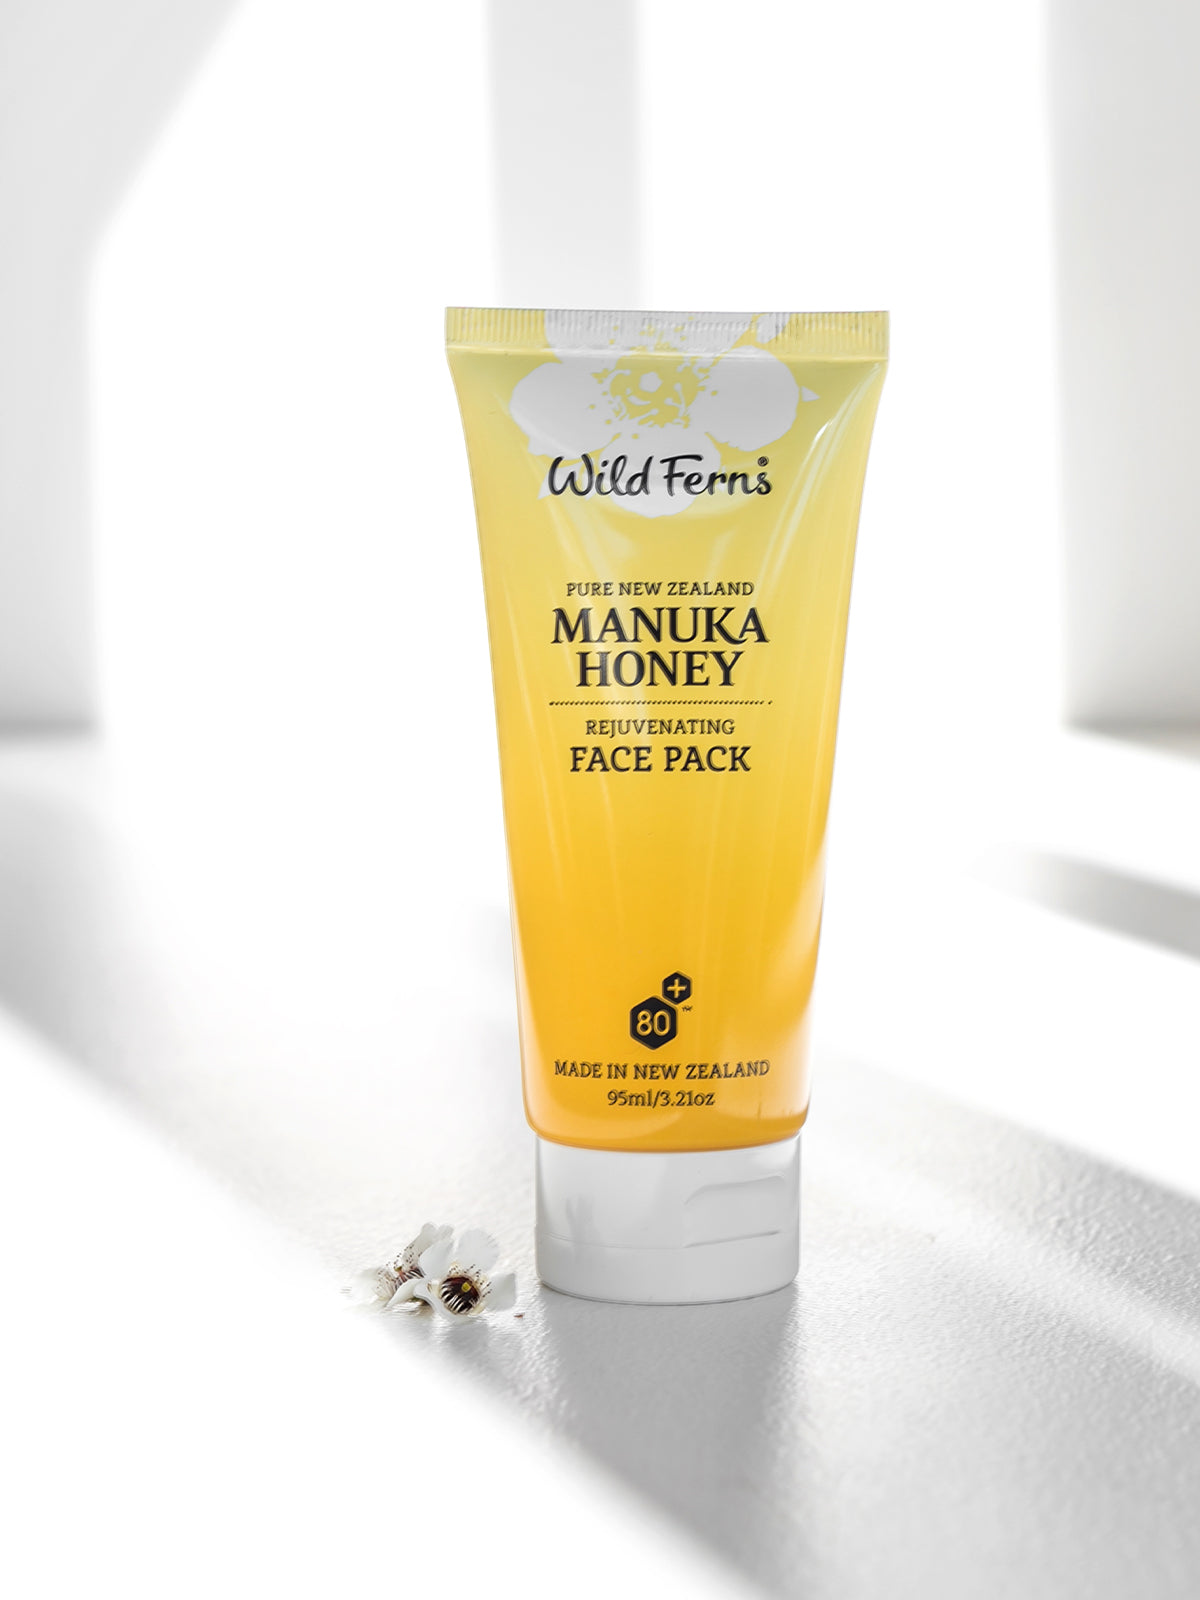 Manuka Honey Rejuvenating Face Pack, 20g/95ml